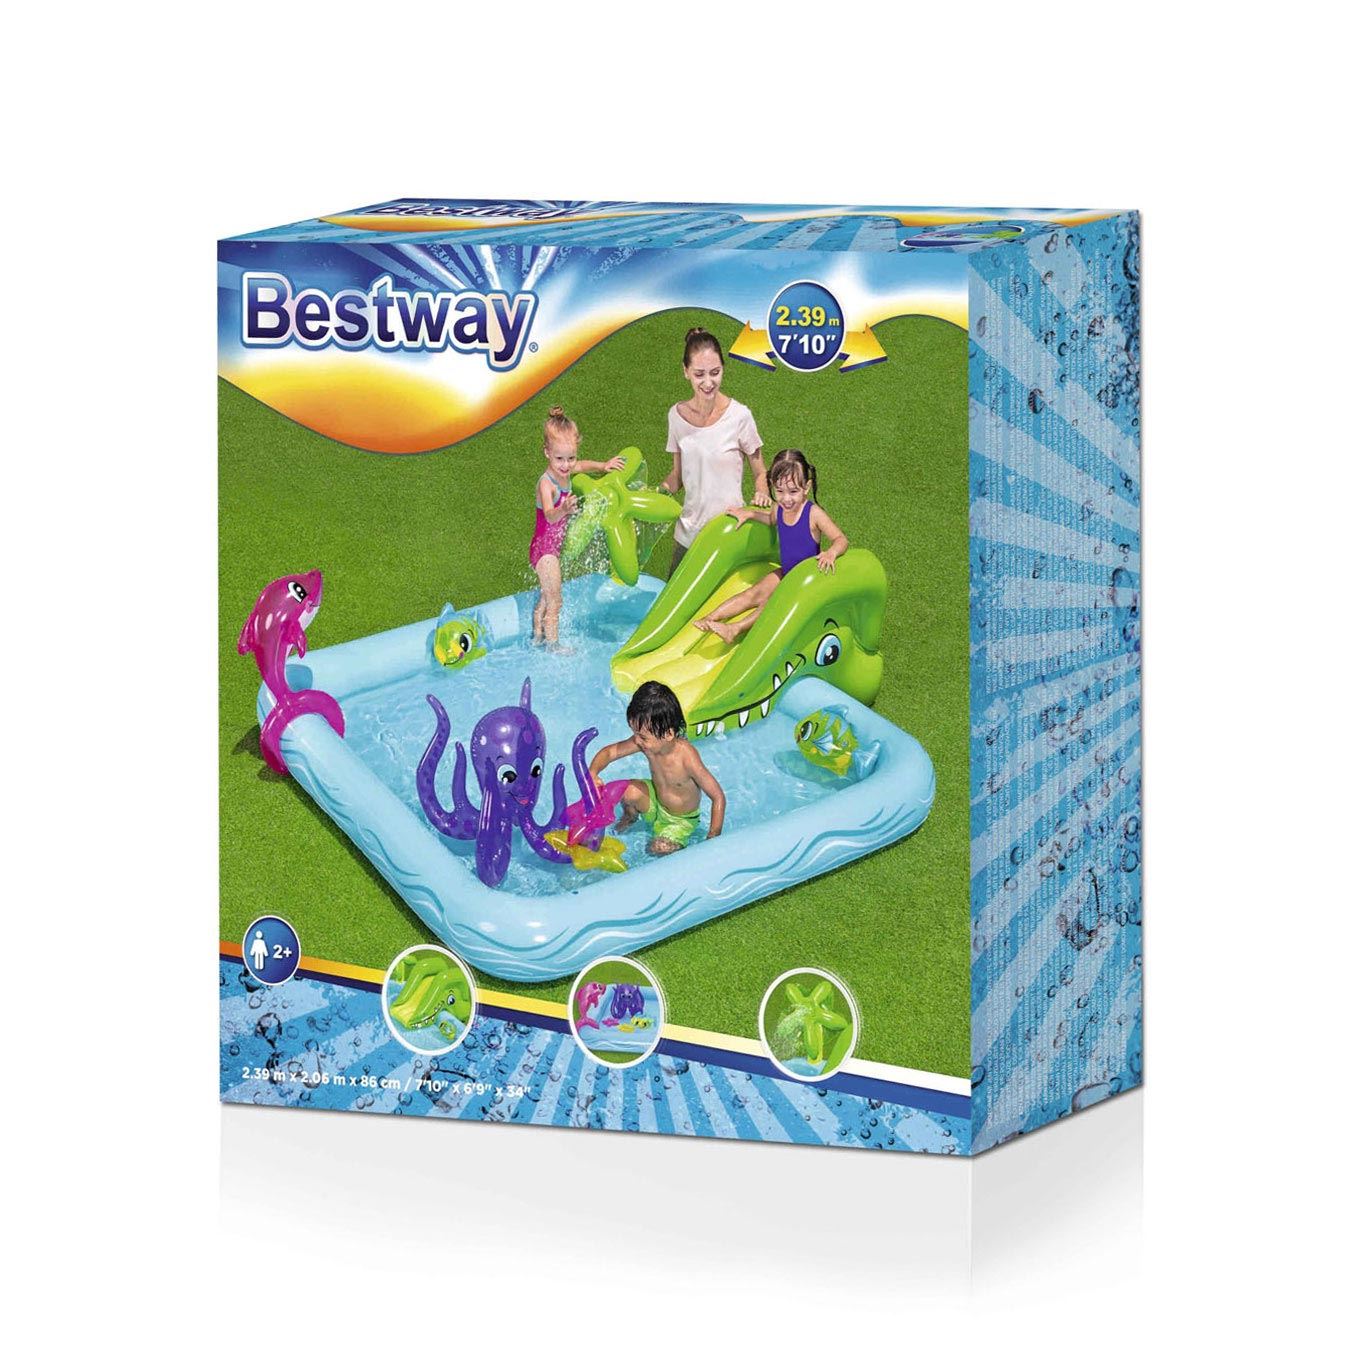 Bestway-7-10-x-6-9-x-34-2-39m-x-2-06m-x-86cm-Fantastic-Aquarium-Play-Center